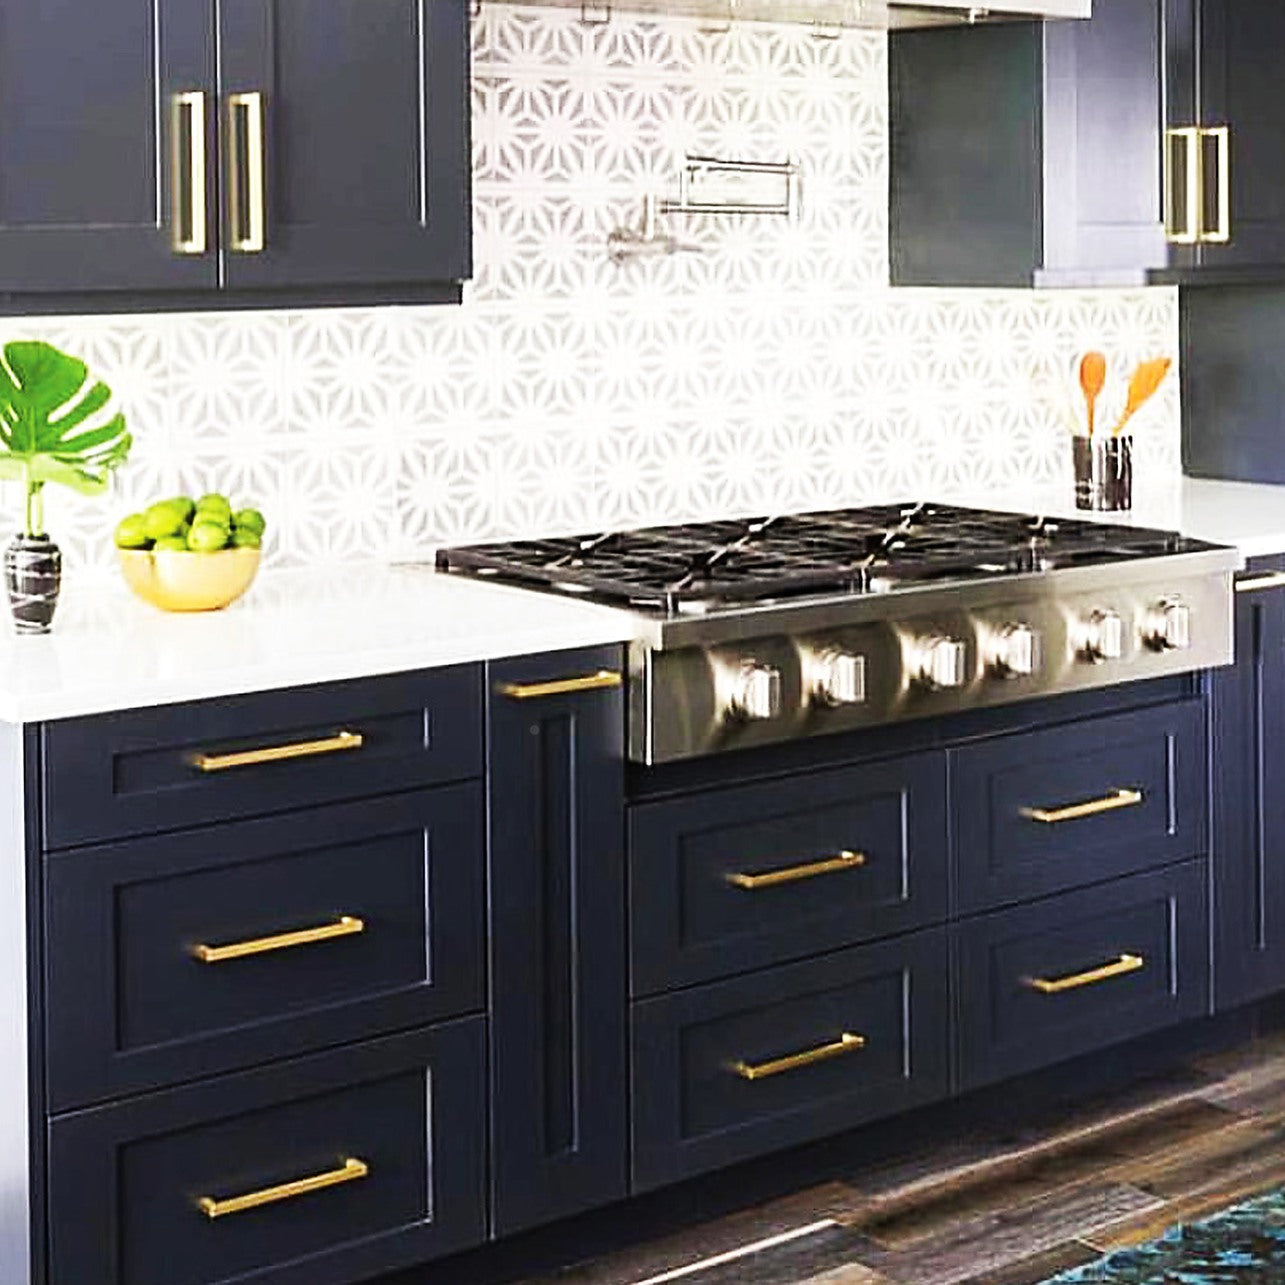 15 x Brushed Brass Drawer Pulls Kitchen Cabinet Handles - Gold Finish 192mm  - DIY & Renovation > Kitchen